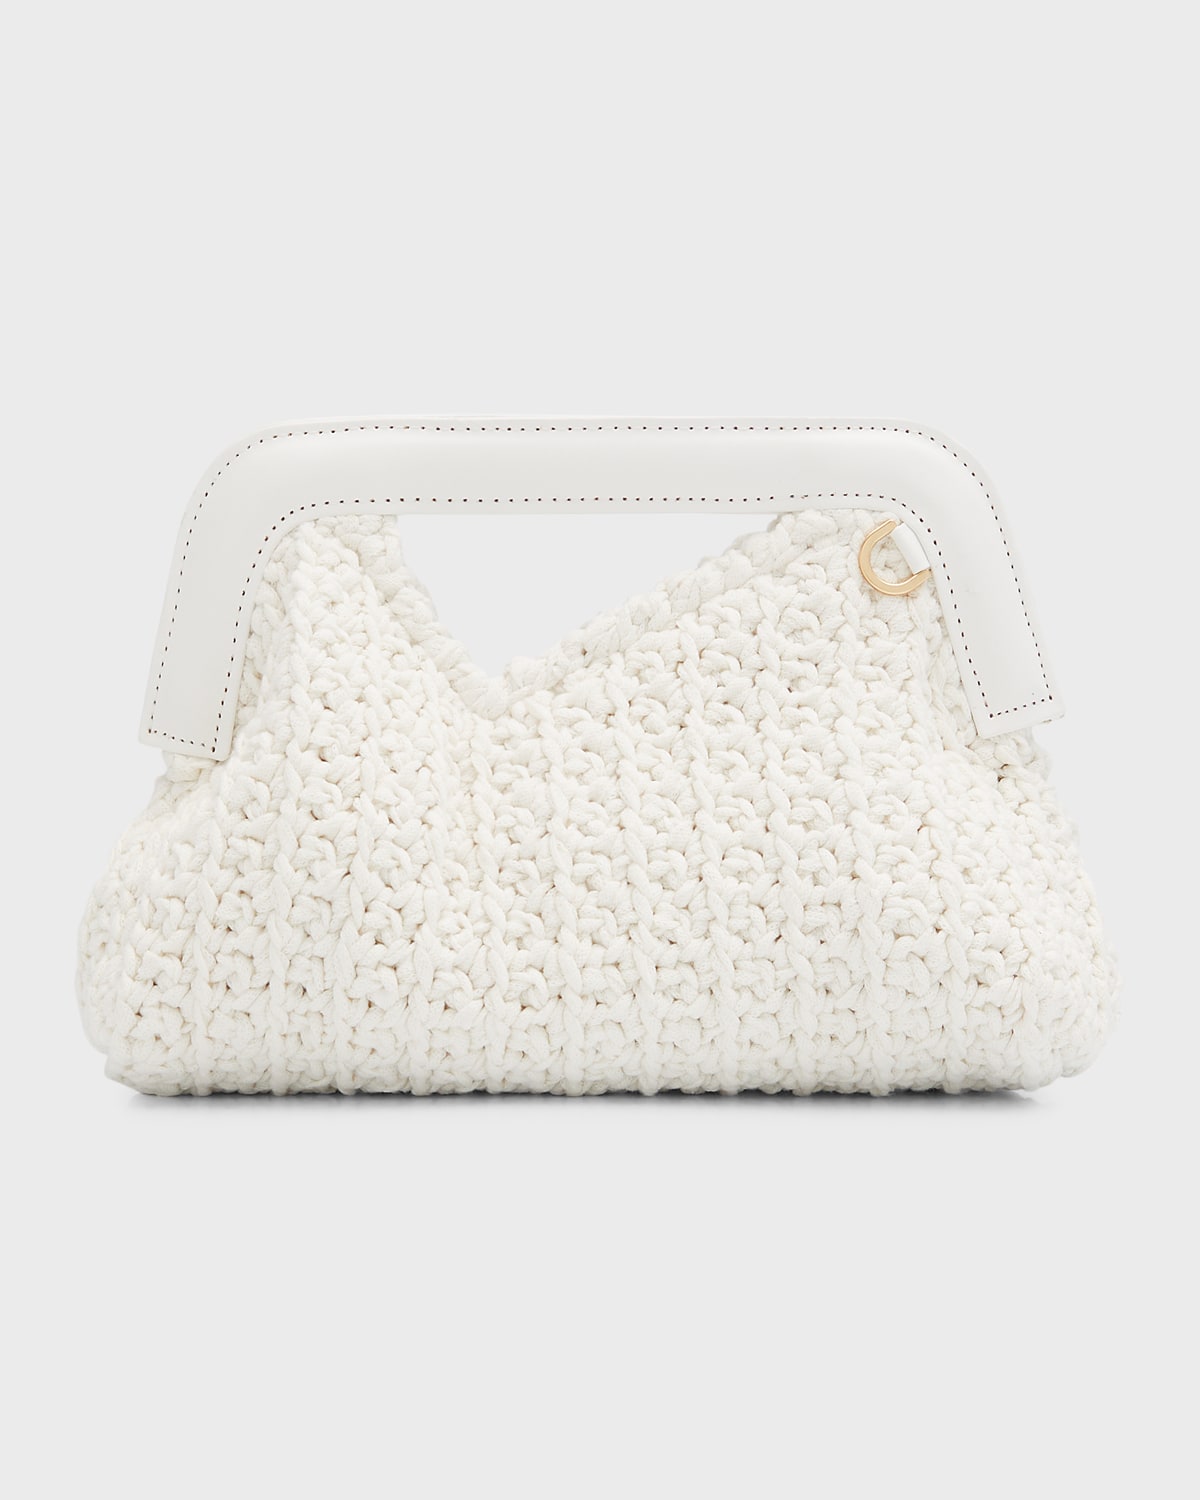 Kooreloo The Mediterraneo Crochet Clutch Bag with Strap